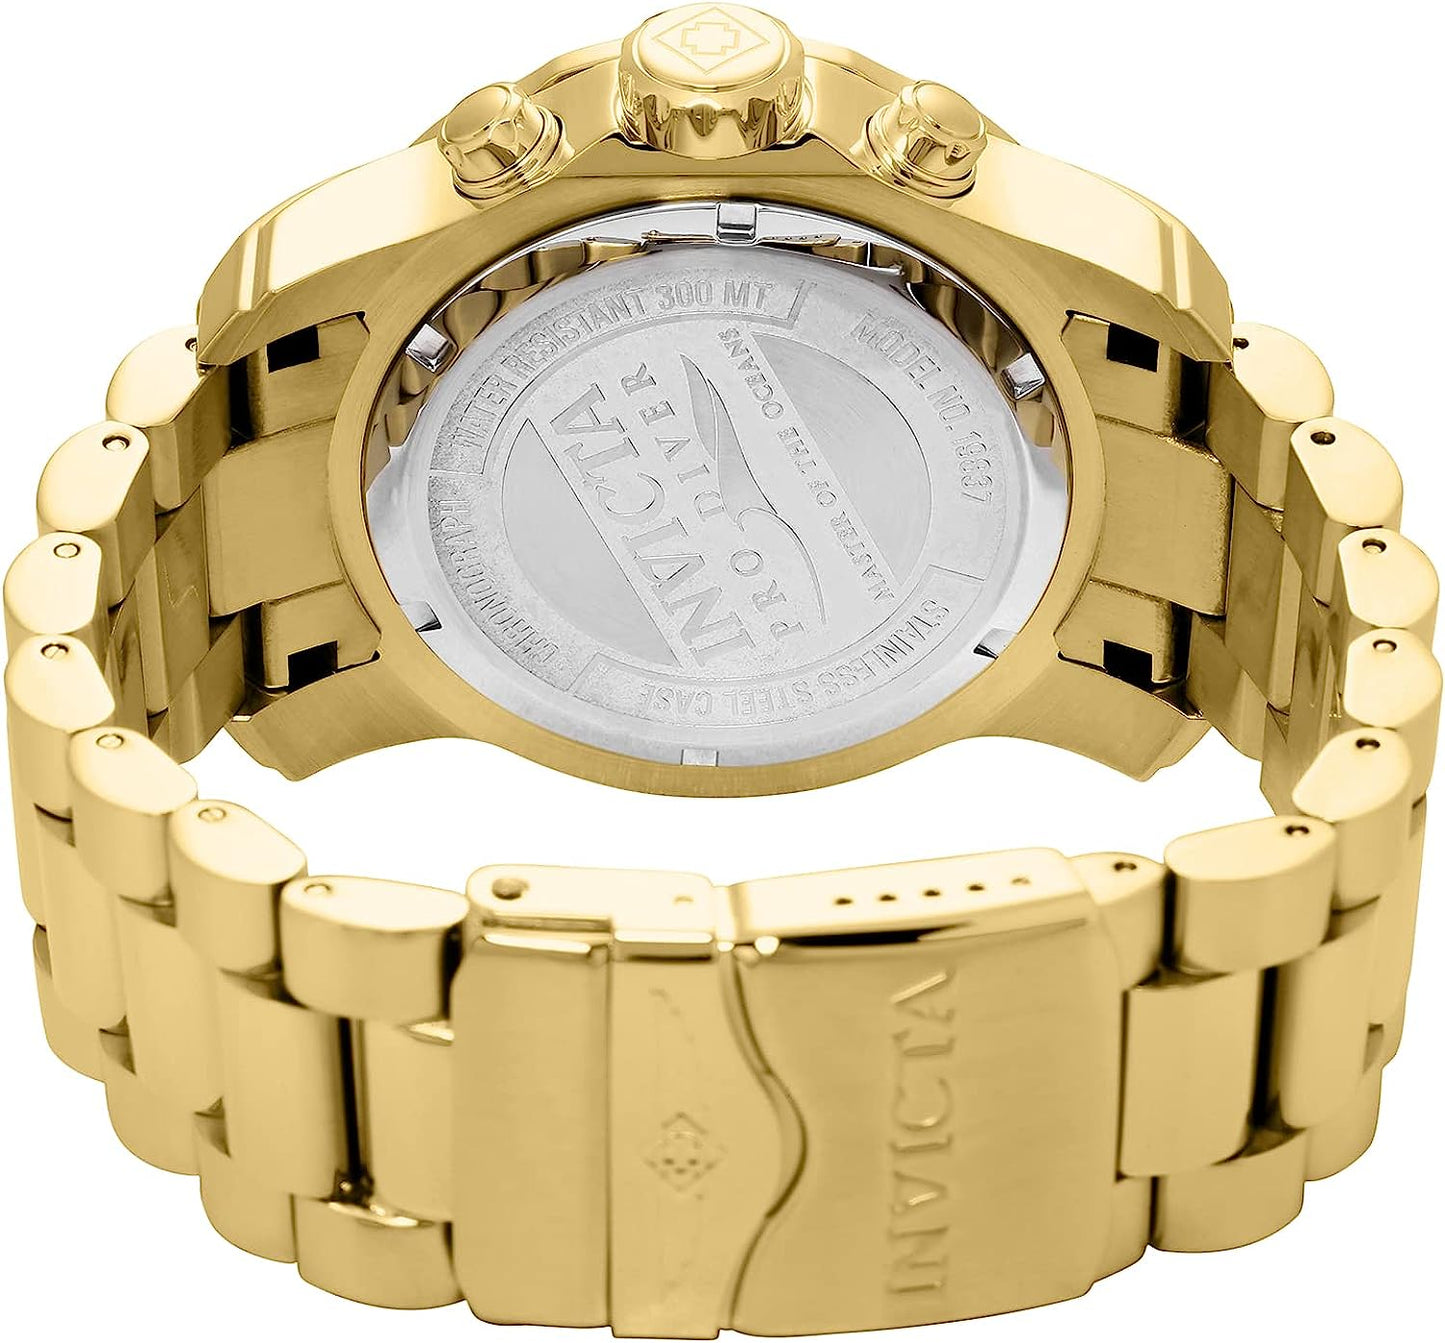 Pro Diver Analog Display Swiss Quartz Gold Watch